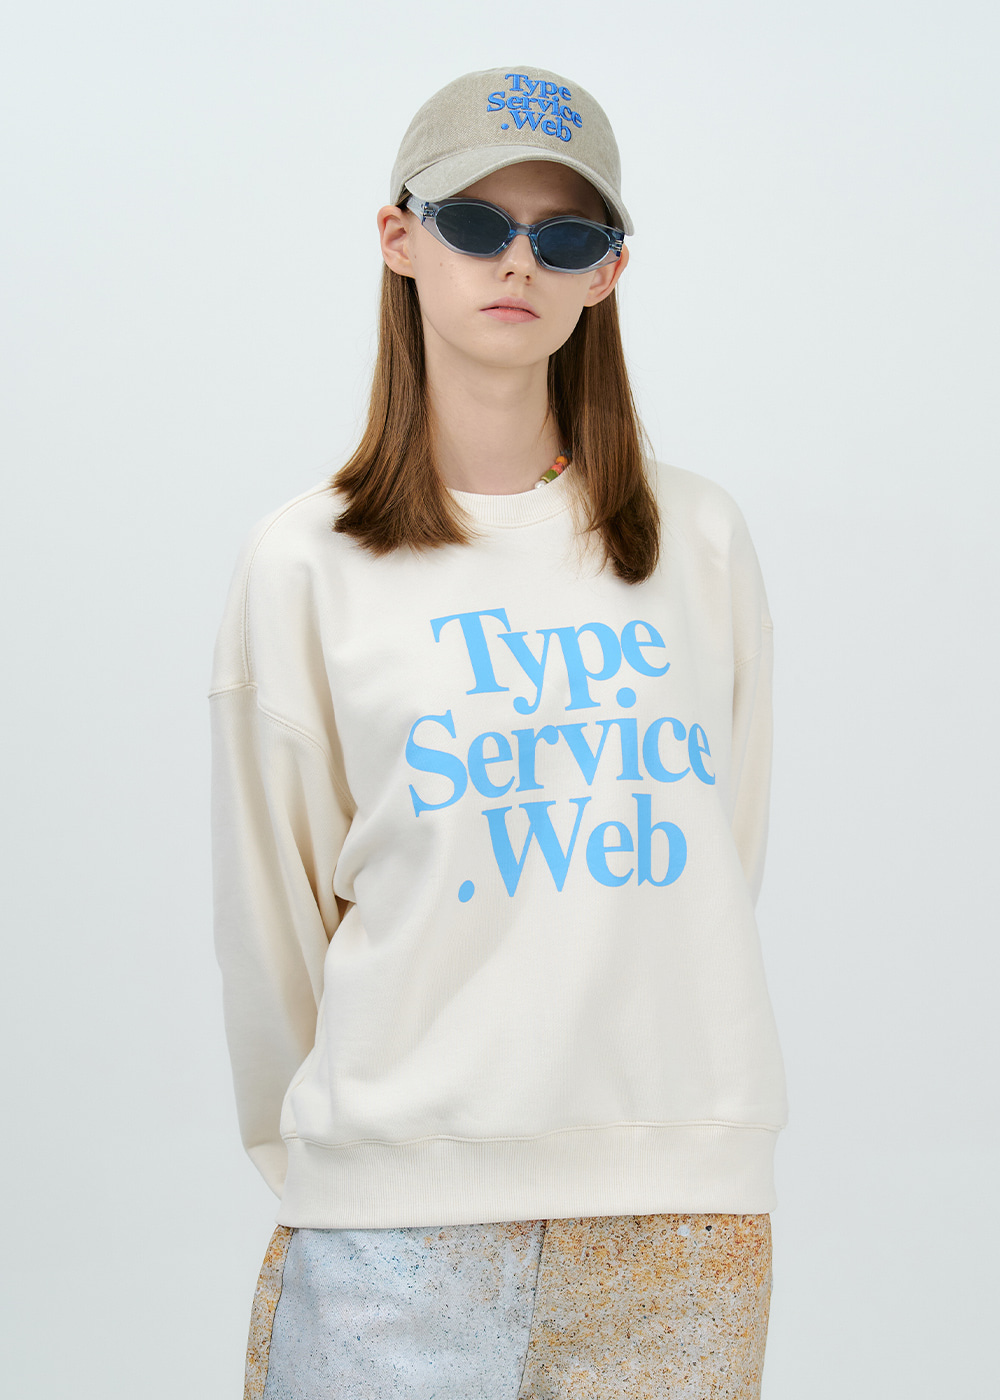 Typeservice Web Sweatshirt [Ivory]